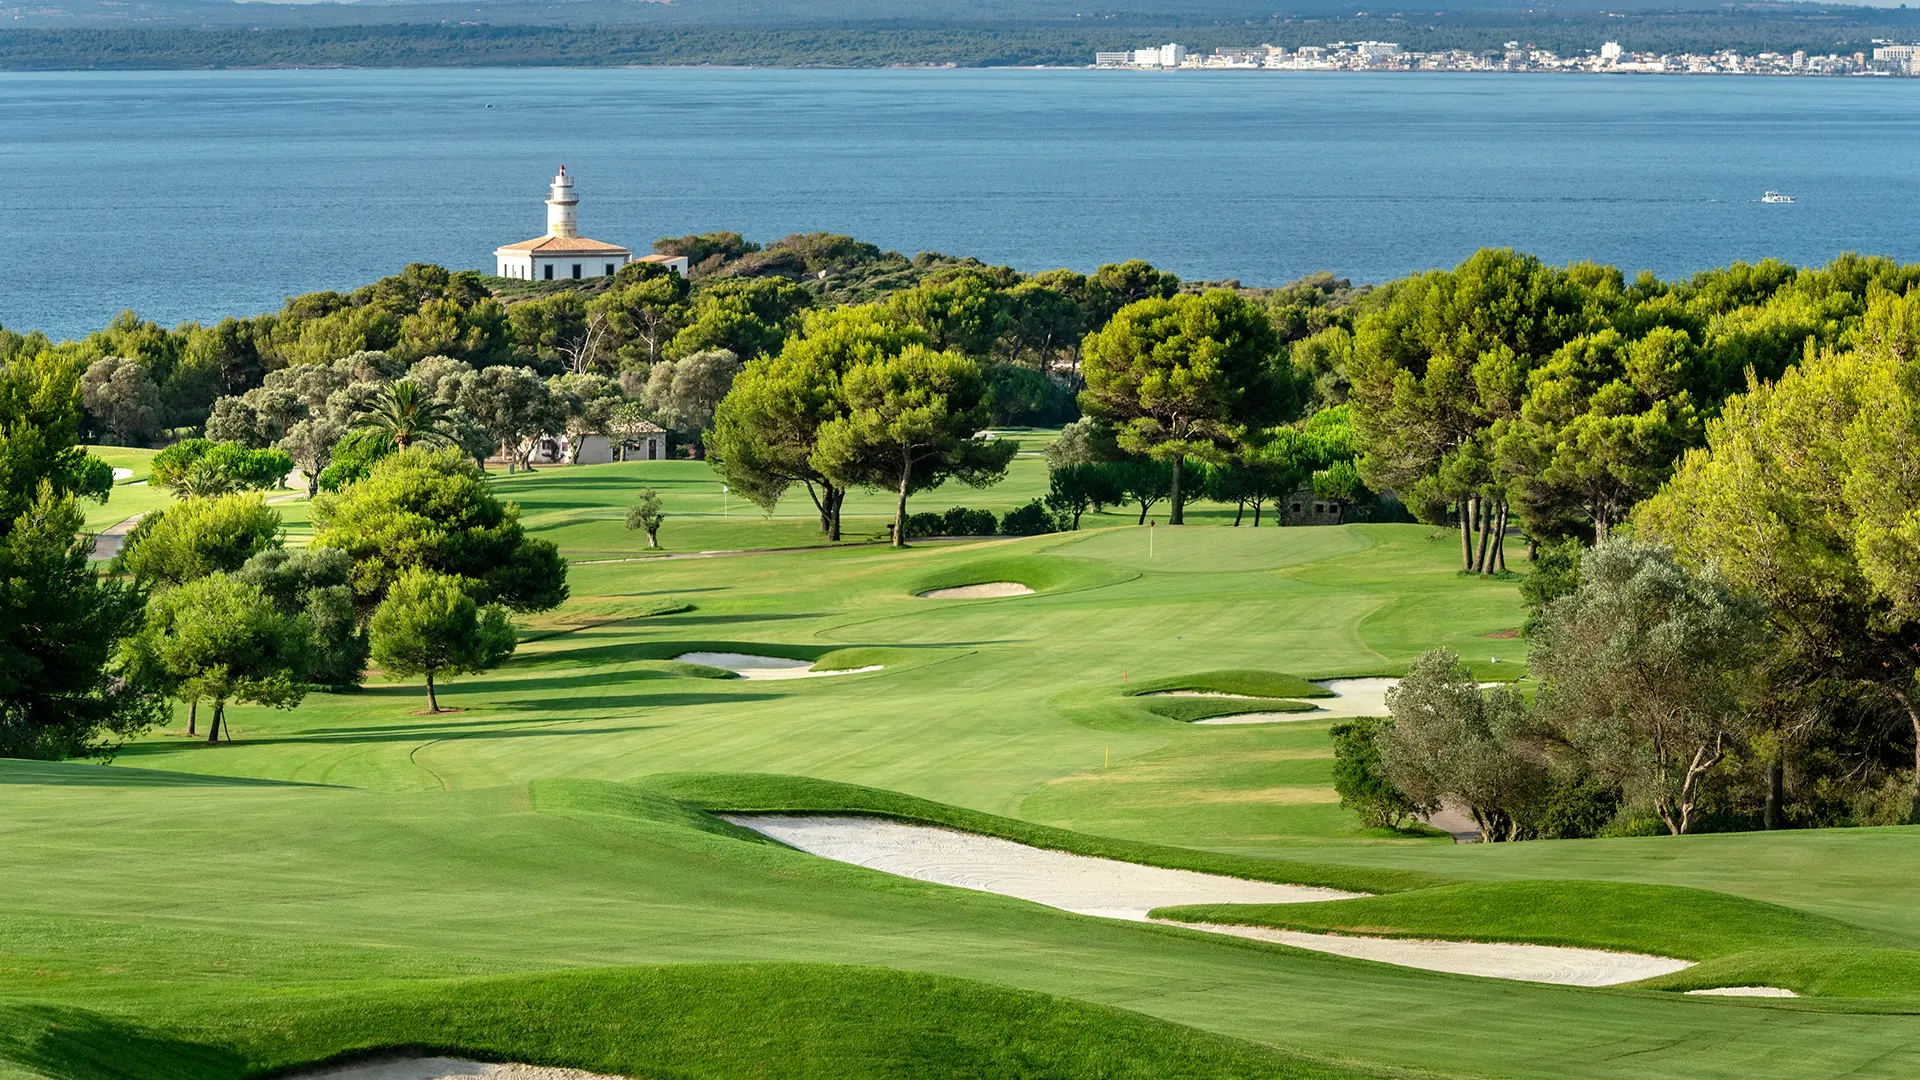 Spain golf holidays - Fuerte Marbella - Spain - Photo 3